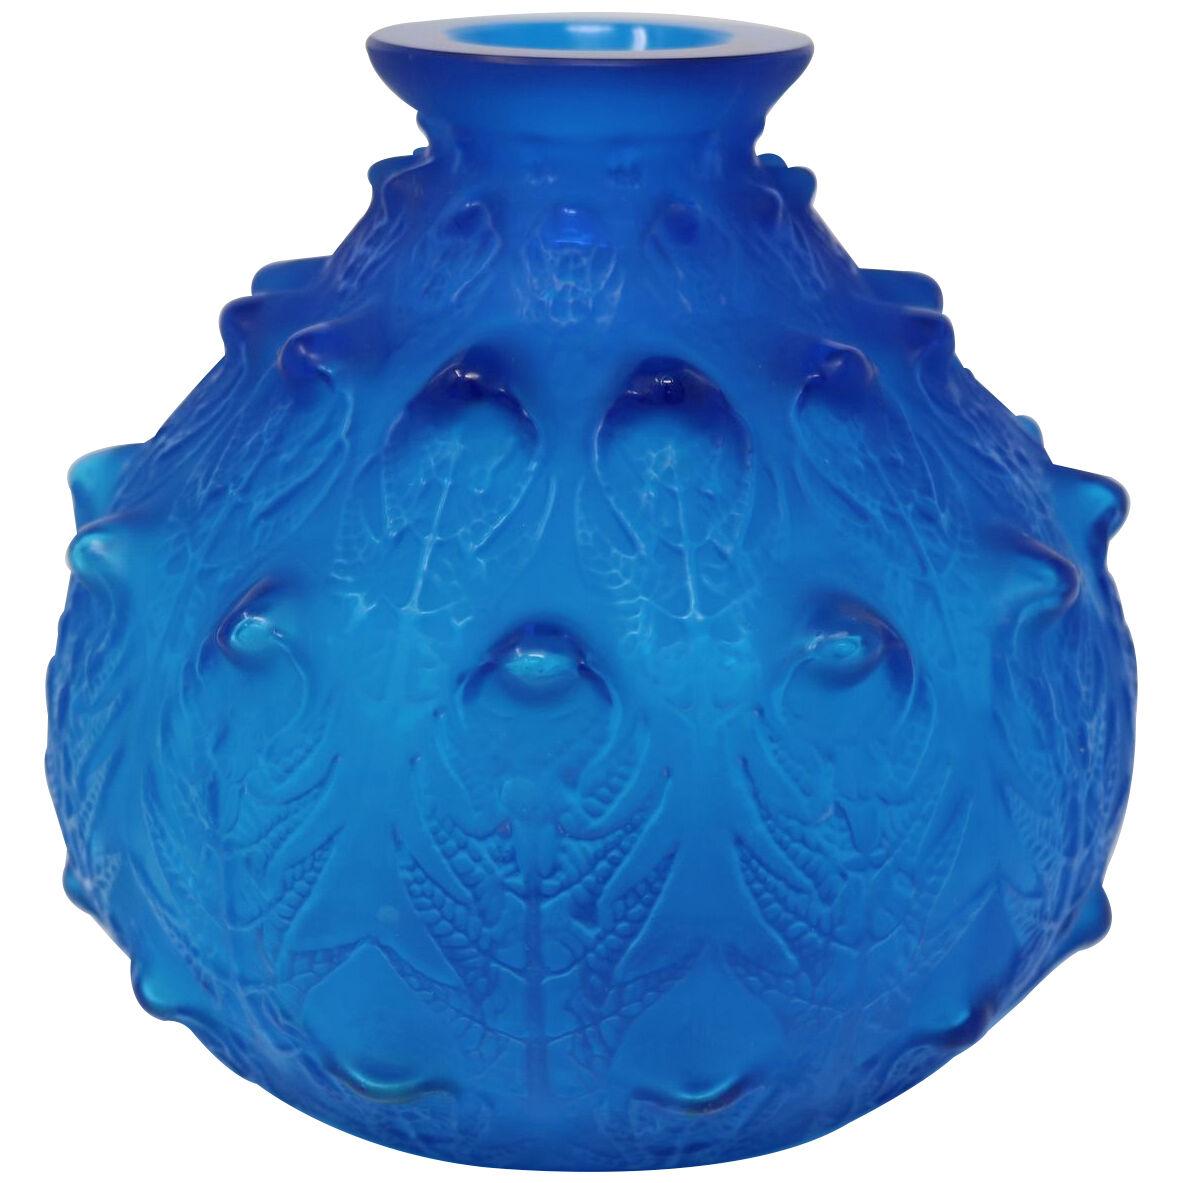 Rene Lalique Electric Blue Coloured Fougeres Vase